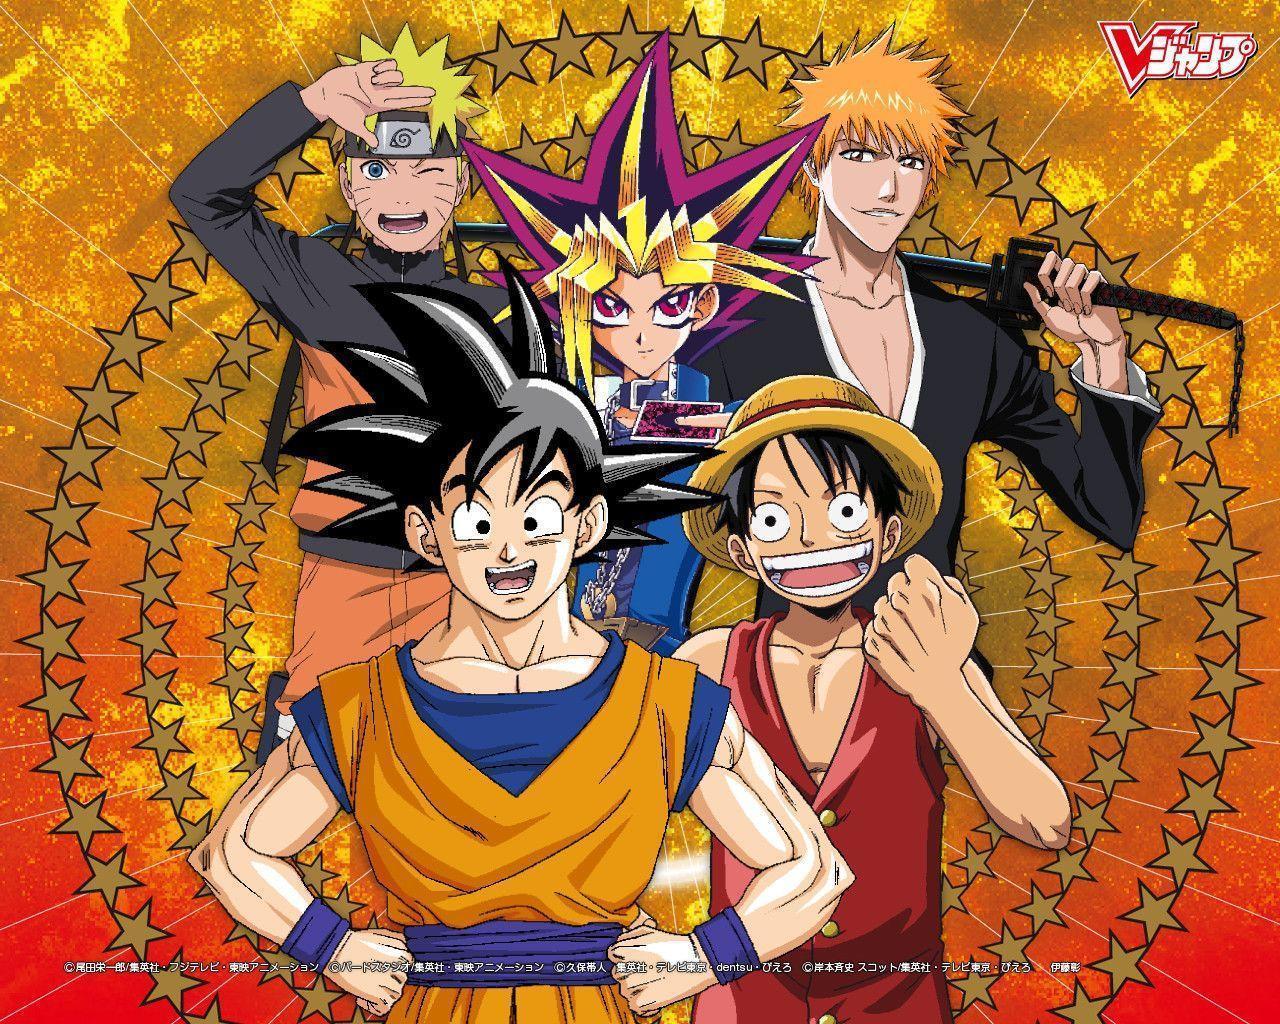 4k Wallpaper Goku And Naruto Wallpaper 1080p